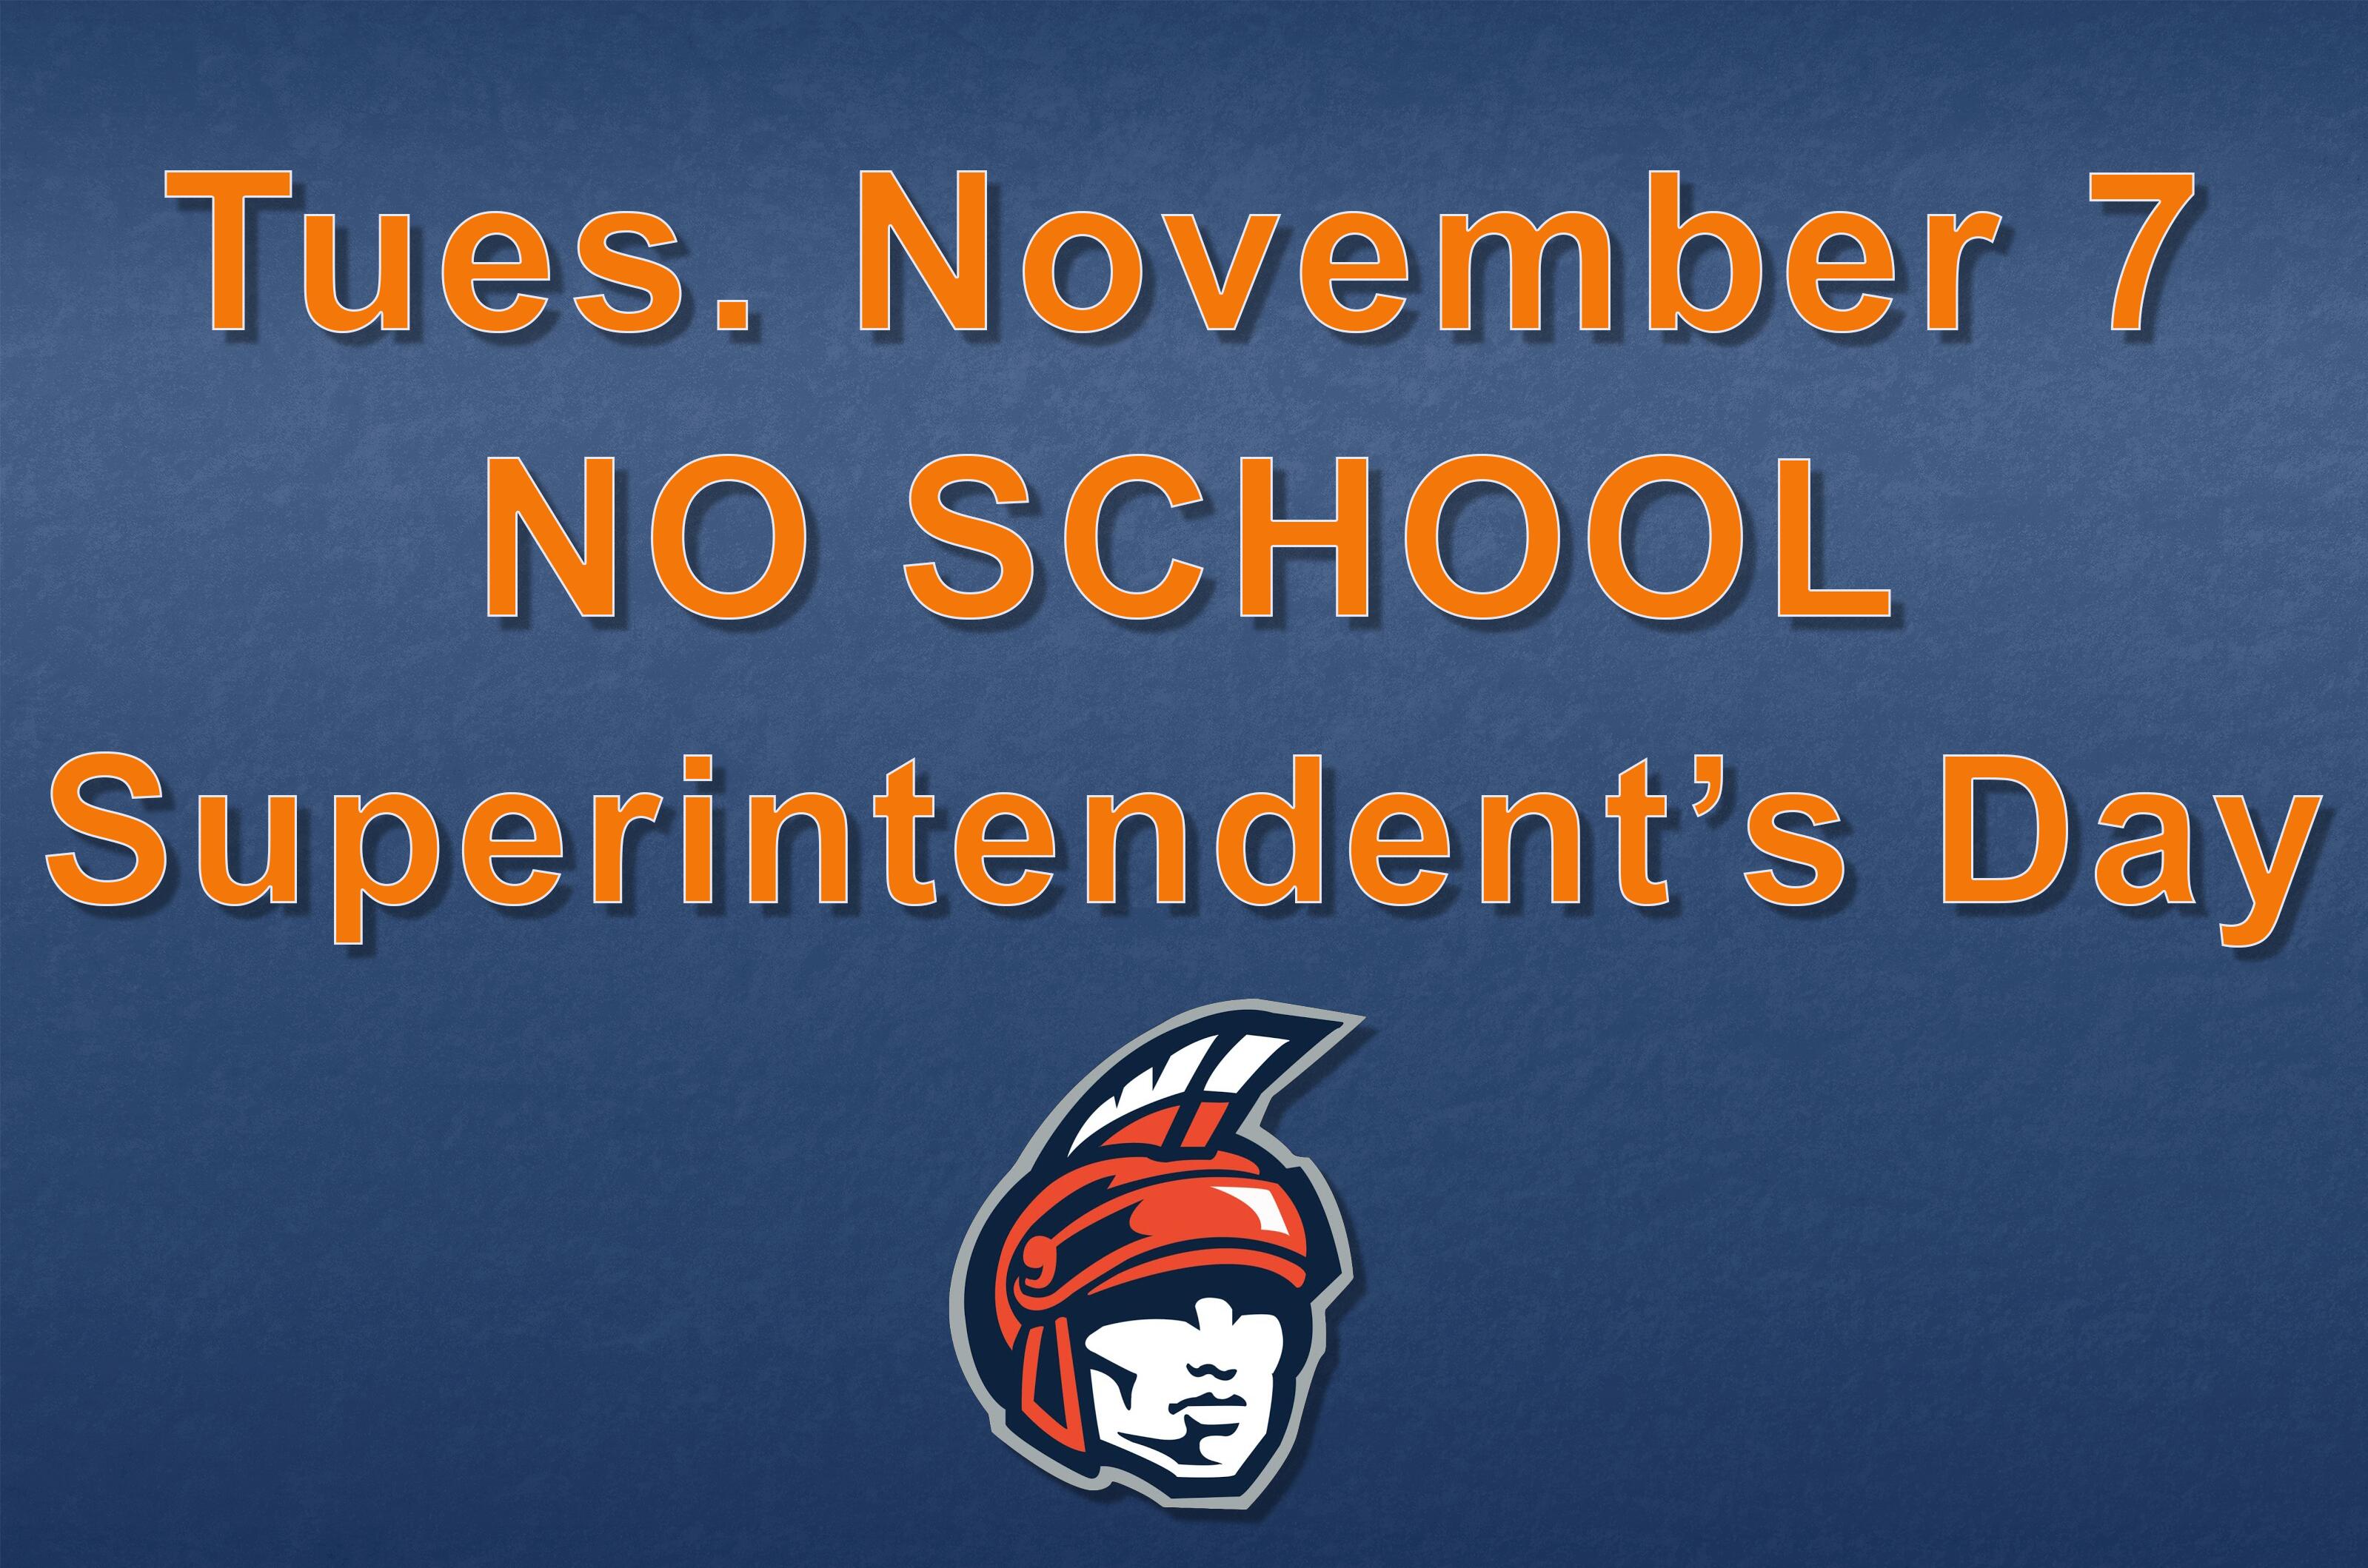 No school Nov 7, Superintendent's day